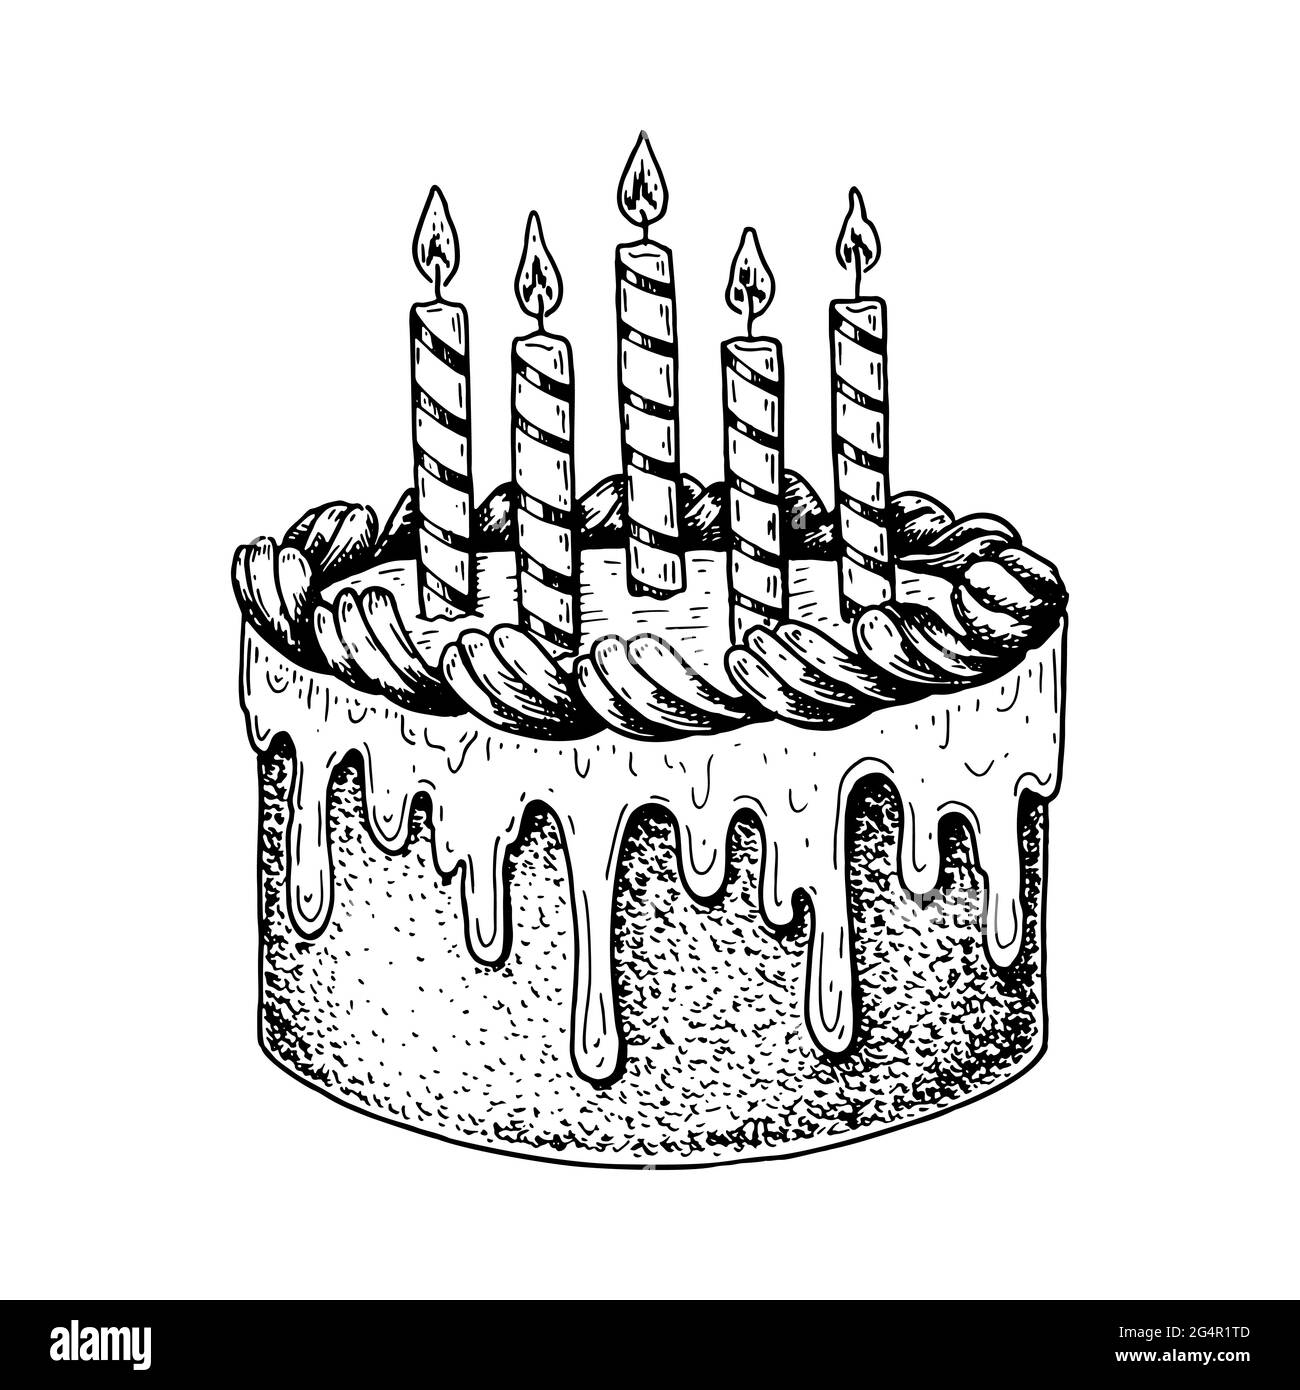 Birthday cake illustration Black and White Stock Photos & Images ...